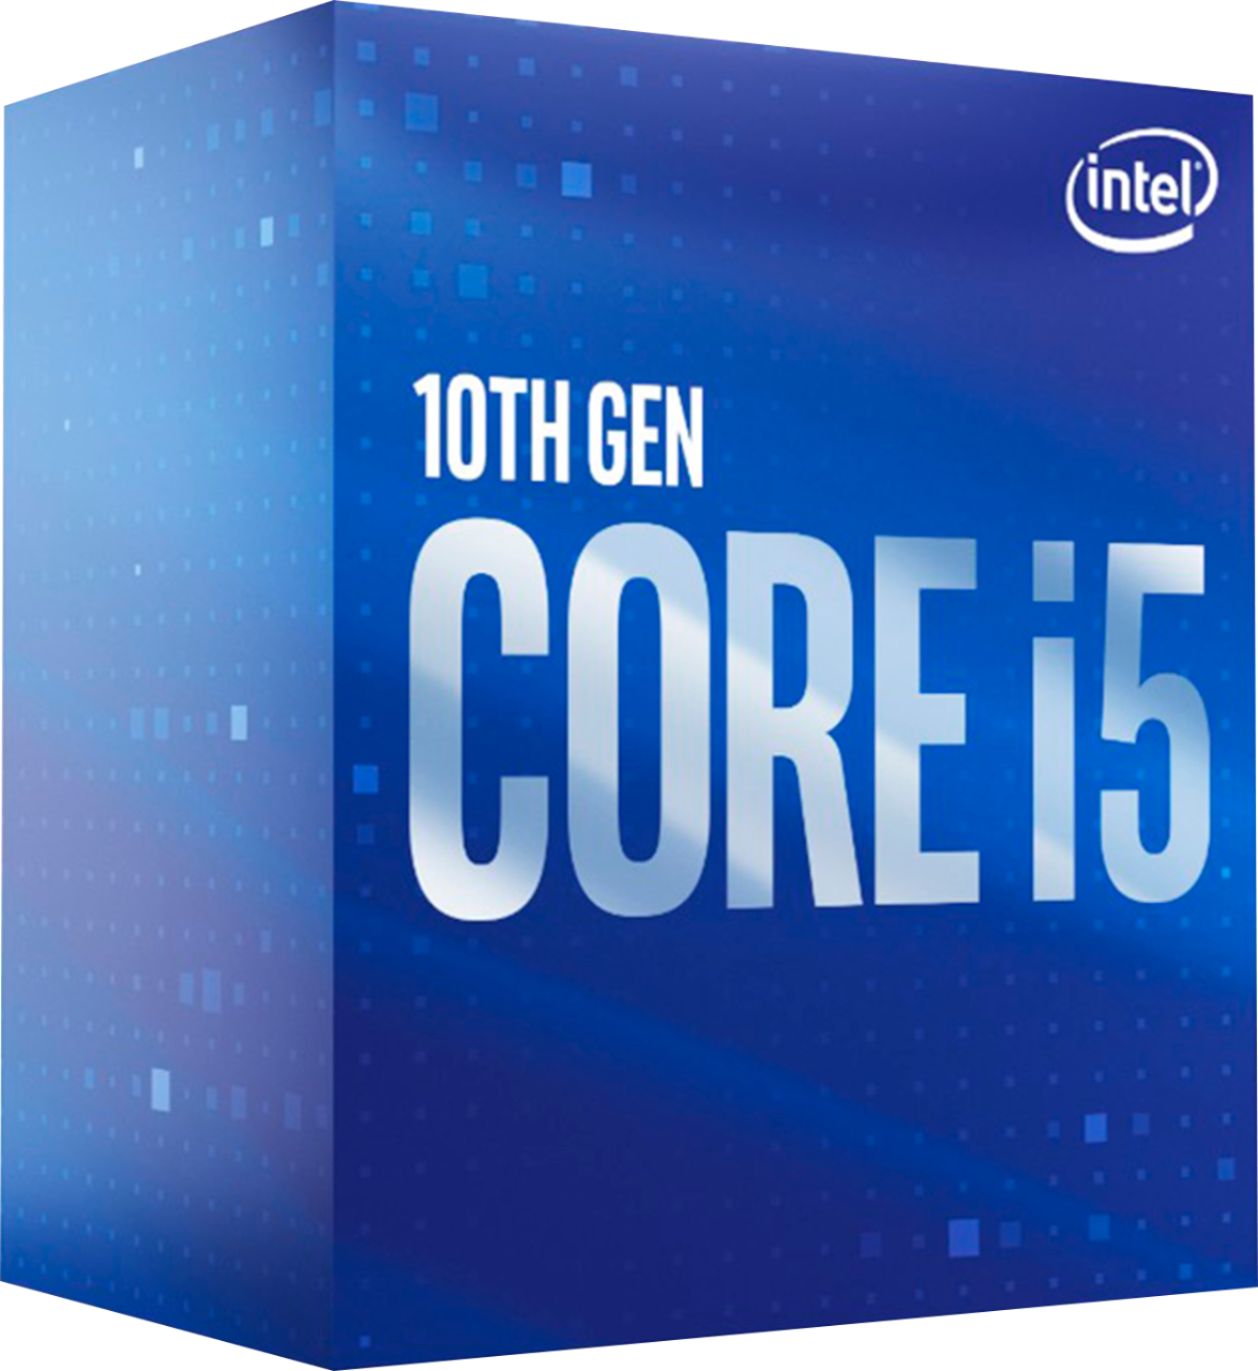 Intel Core i5-10400 10th Generation 6-Core 12-Thread 2.9 GHz (4.3 GHz  Turbo) Socket LGA1200 Locked Desktop Processor BX8070110400 - Best Buy